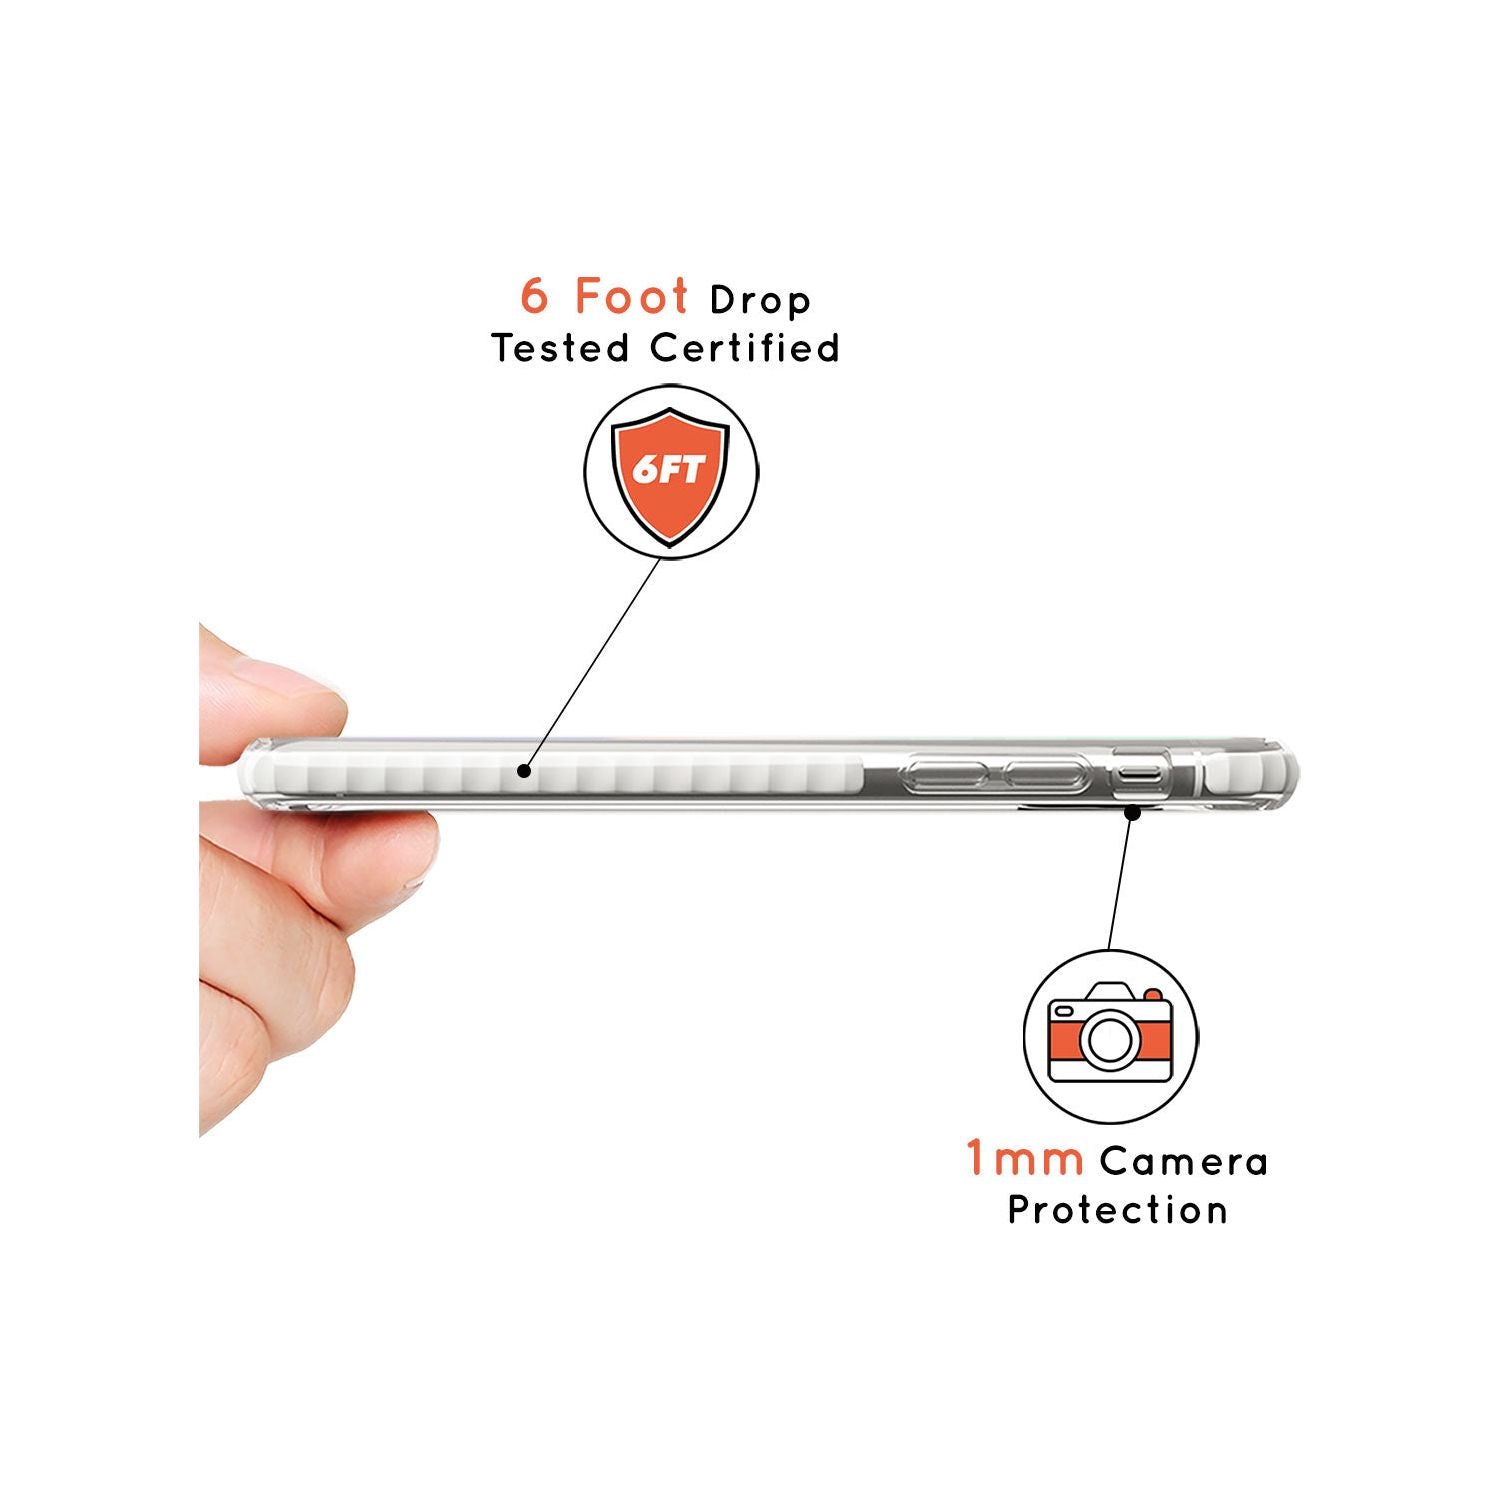 Latte Heart Illusion Impact Phone Case for iPhone SE 8 7 Plus